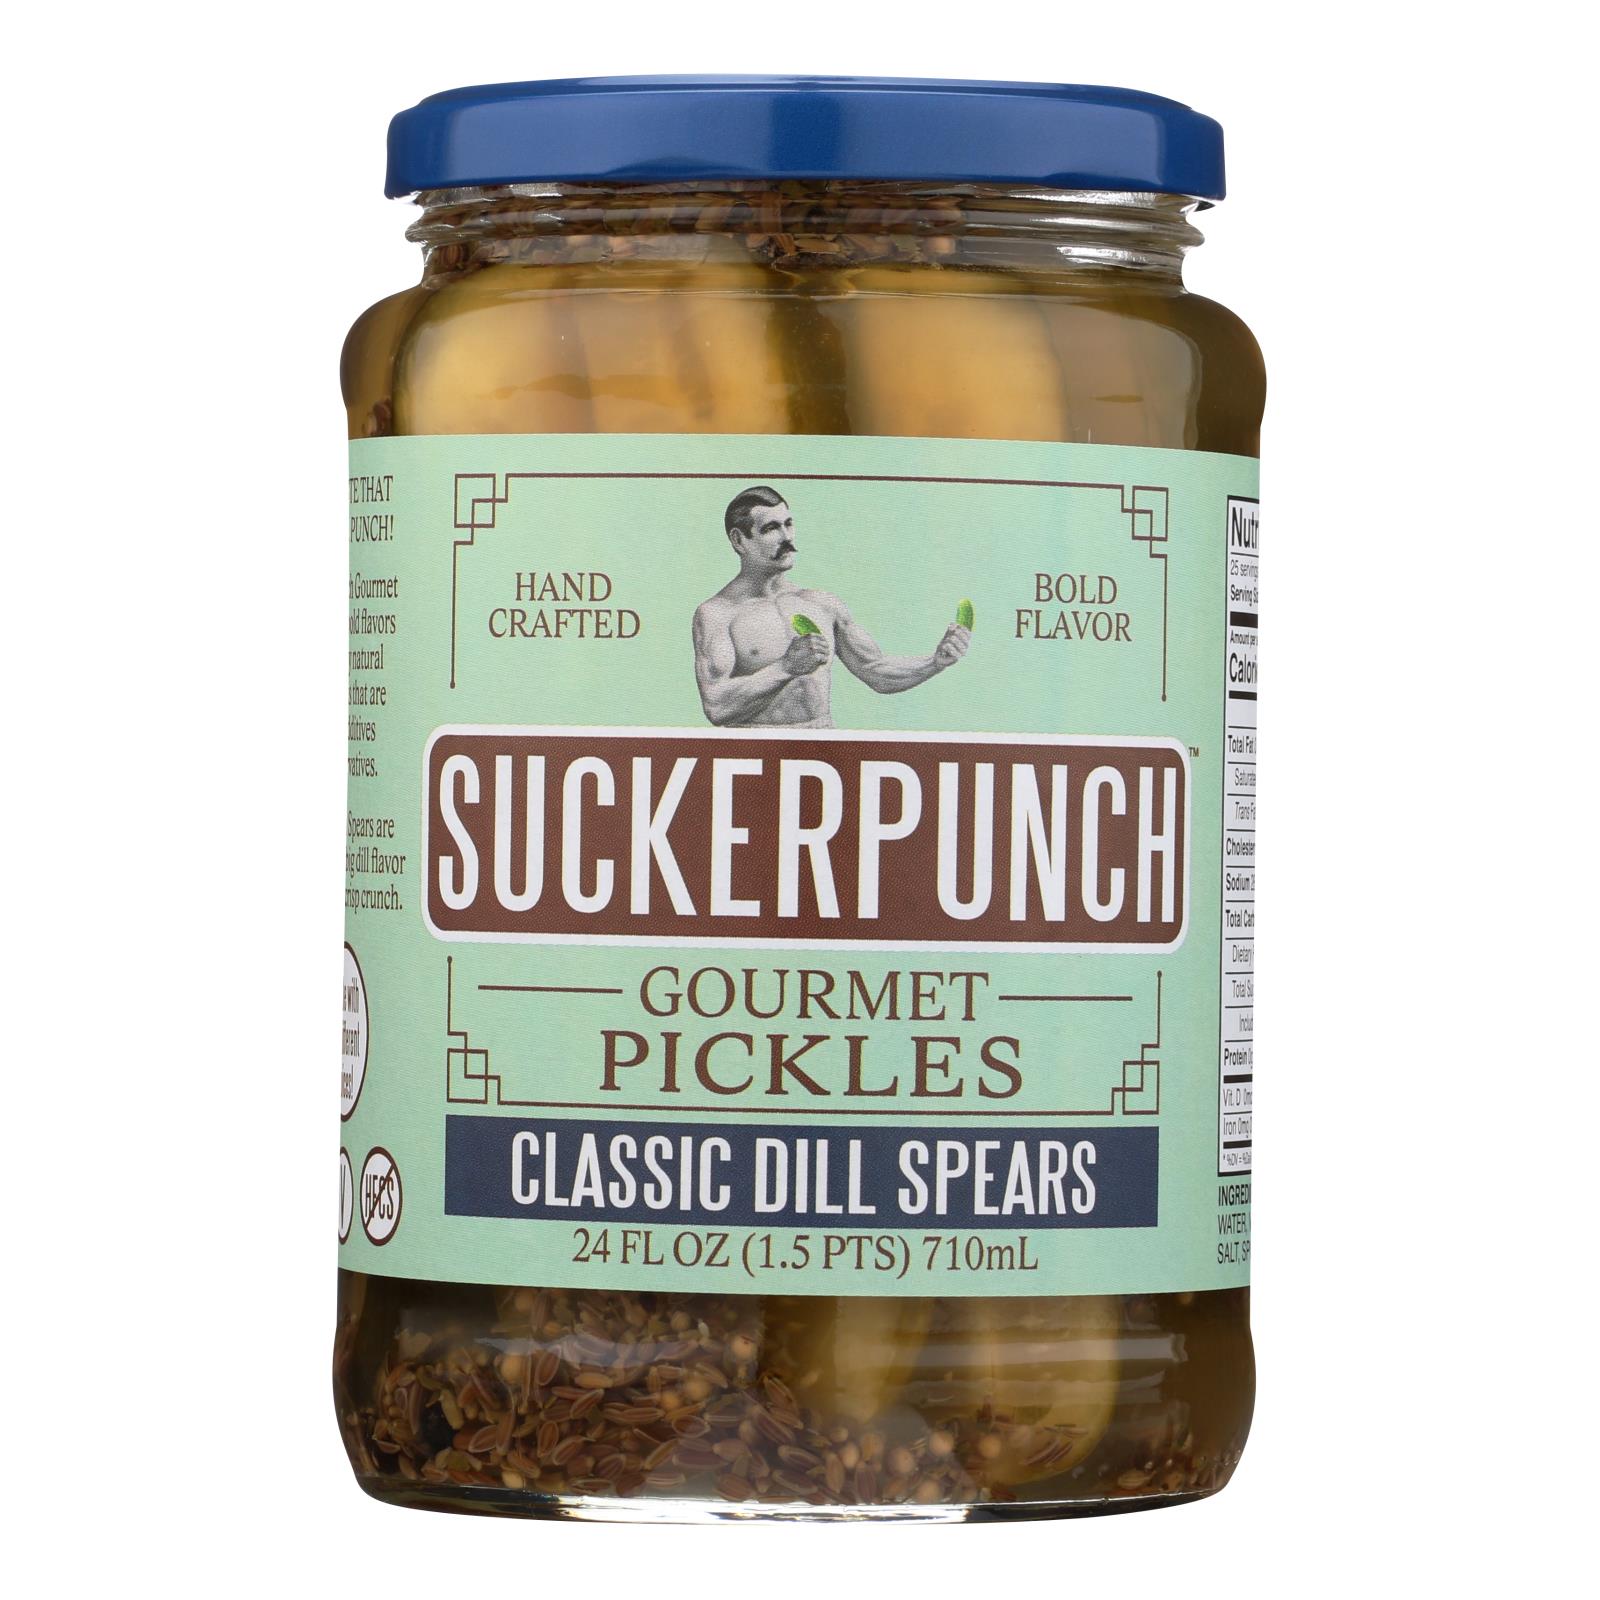 Suckerpunch Gourmet Pickles - 6개 묶음상품 - 24 FZ